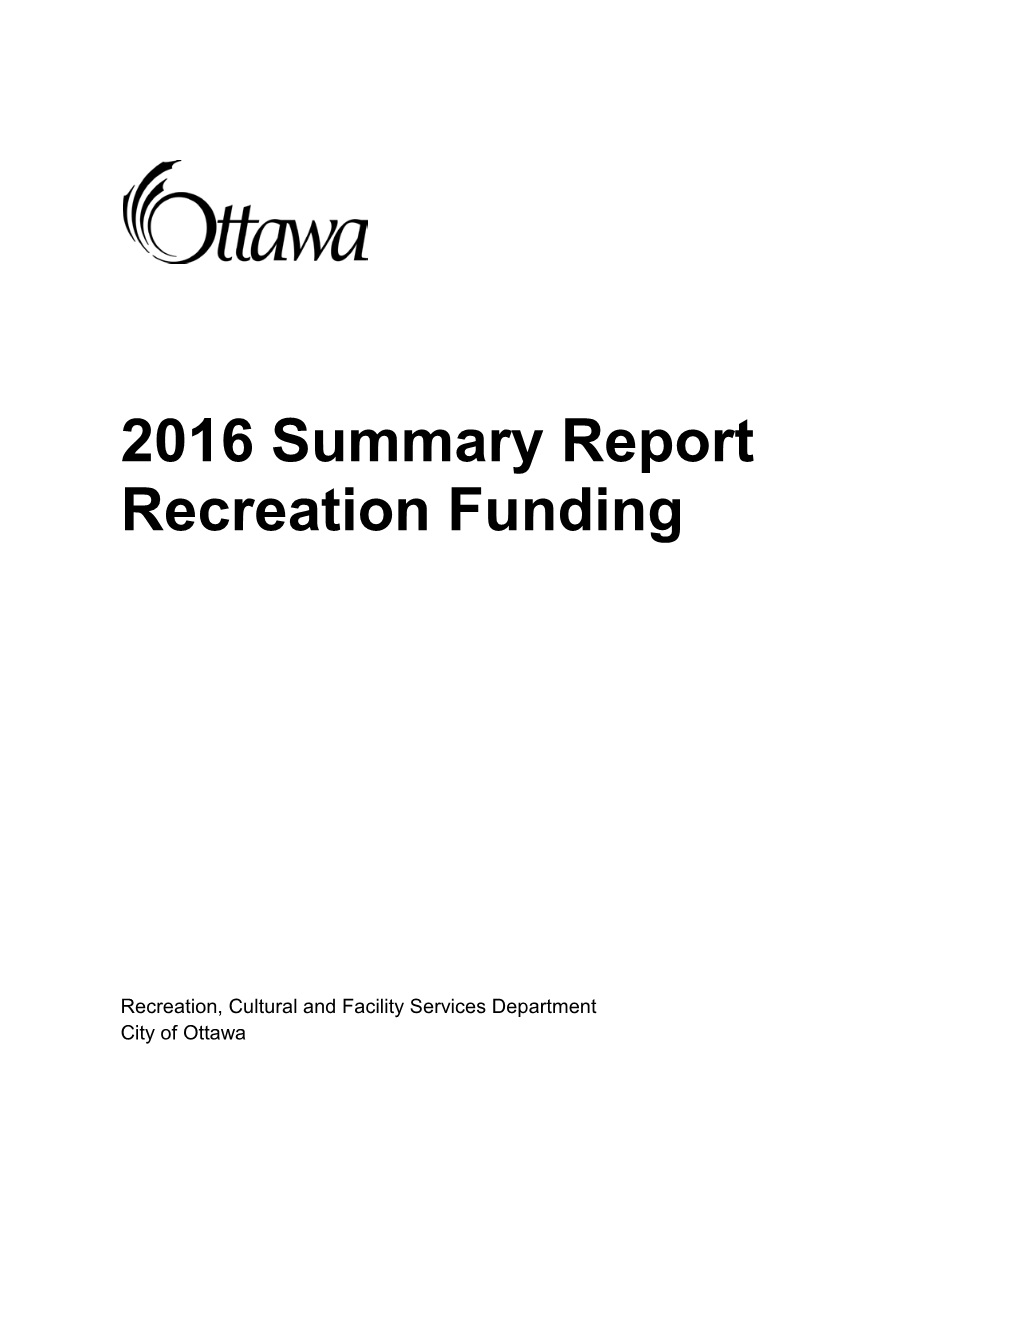 Recreation Funding